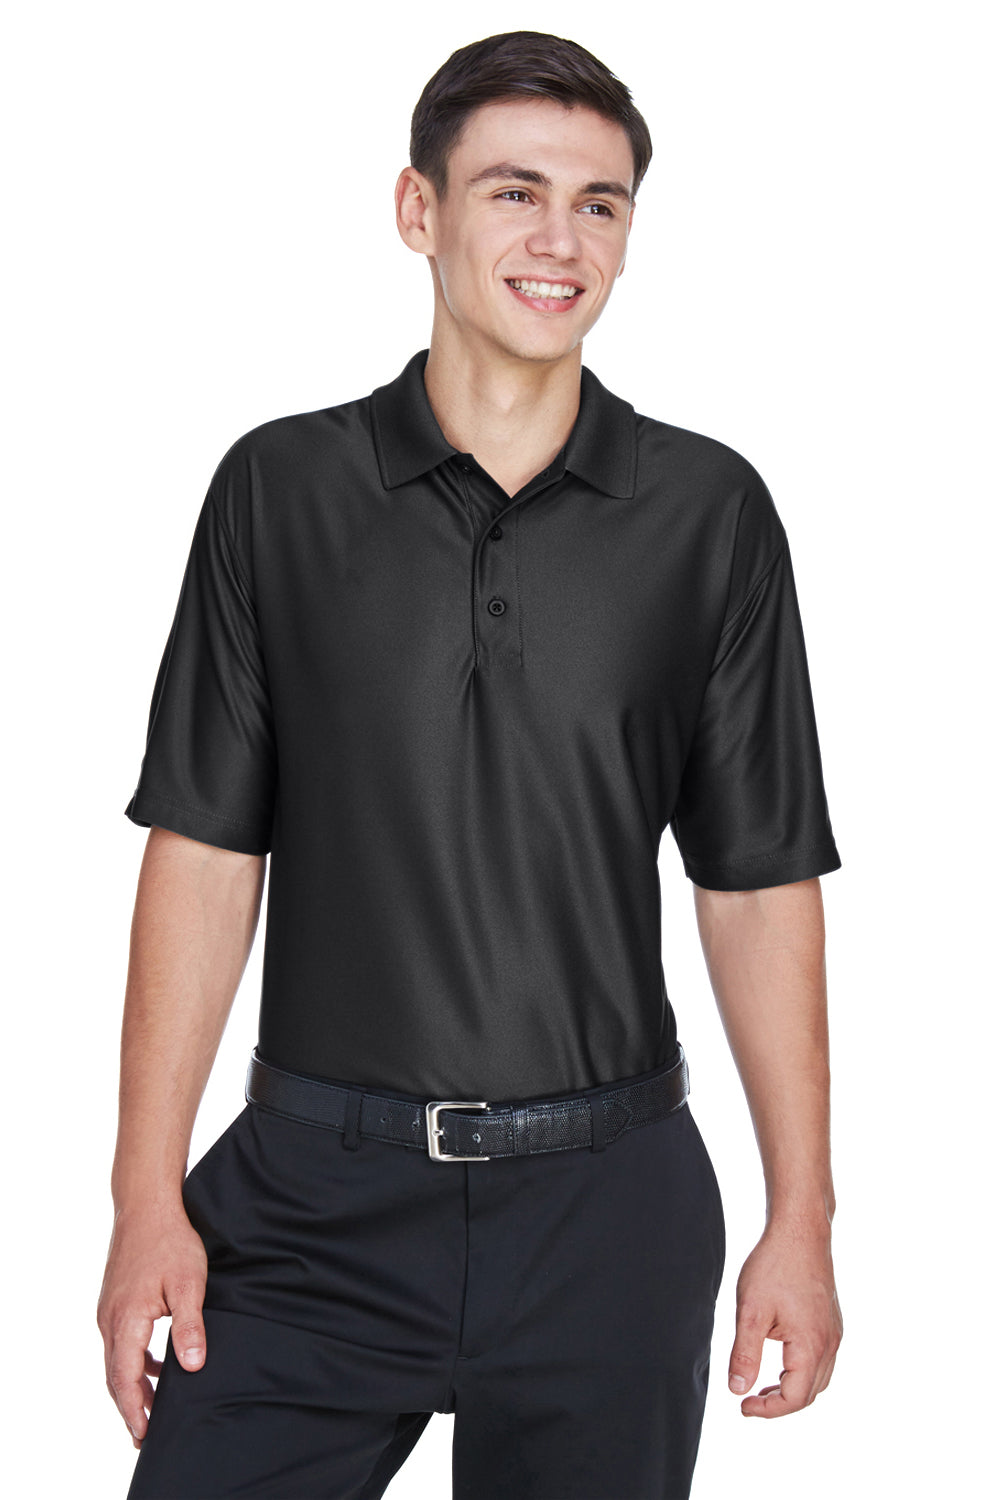 UltraClub 8415 Mens Cool & Dry Elite Performance Moisture Wicking Short Sleeve Polo Shirt Black Front